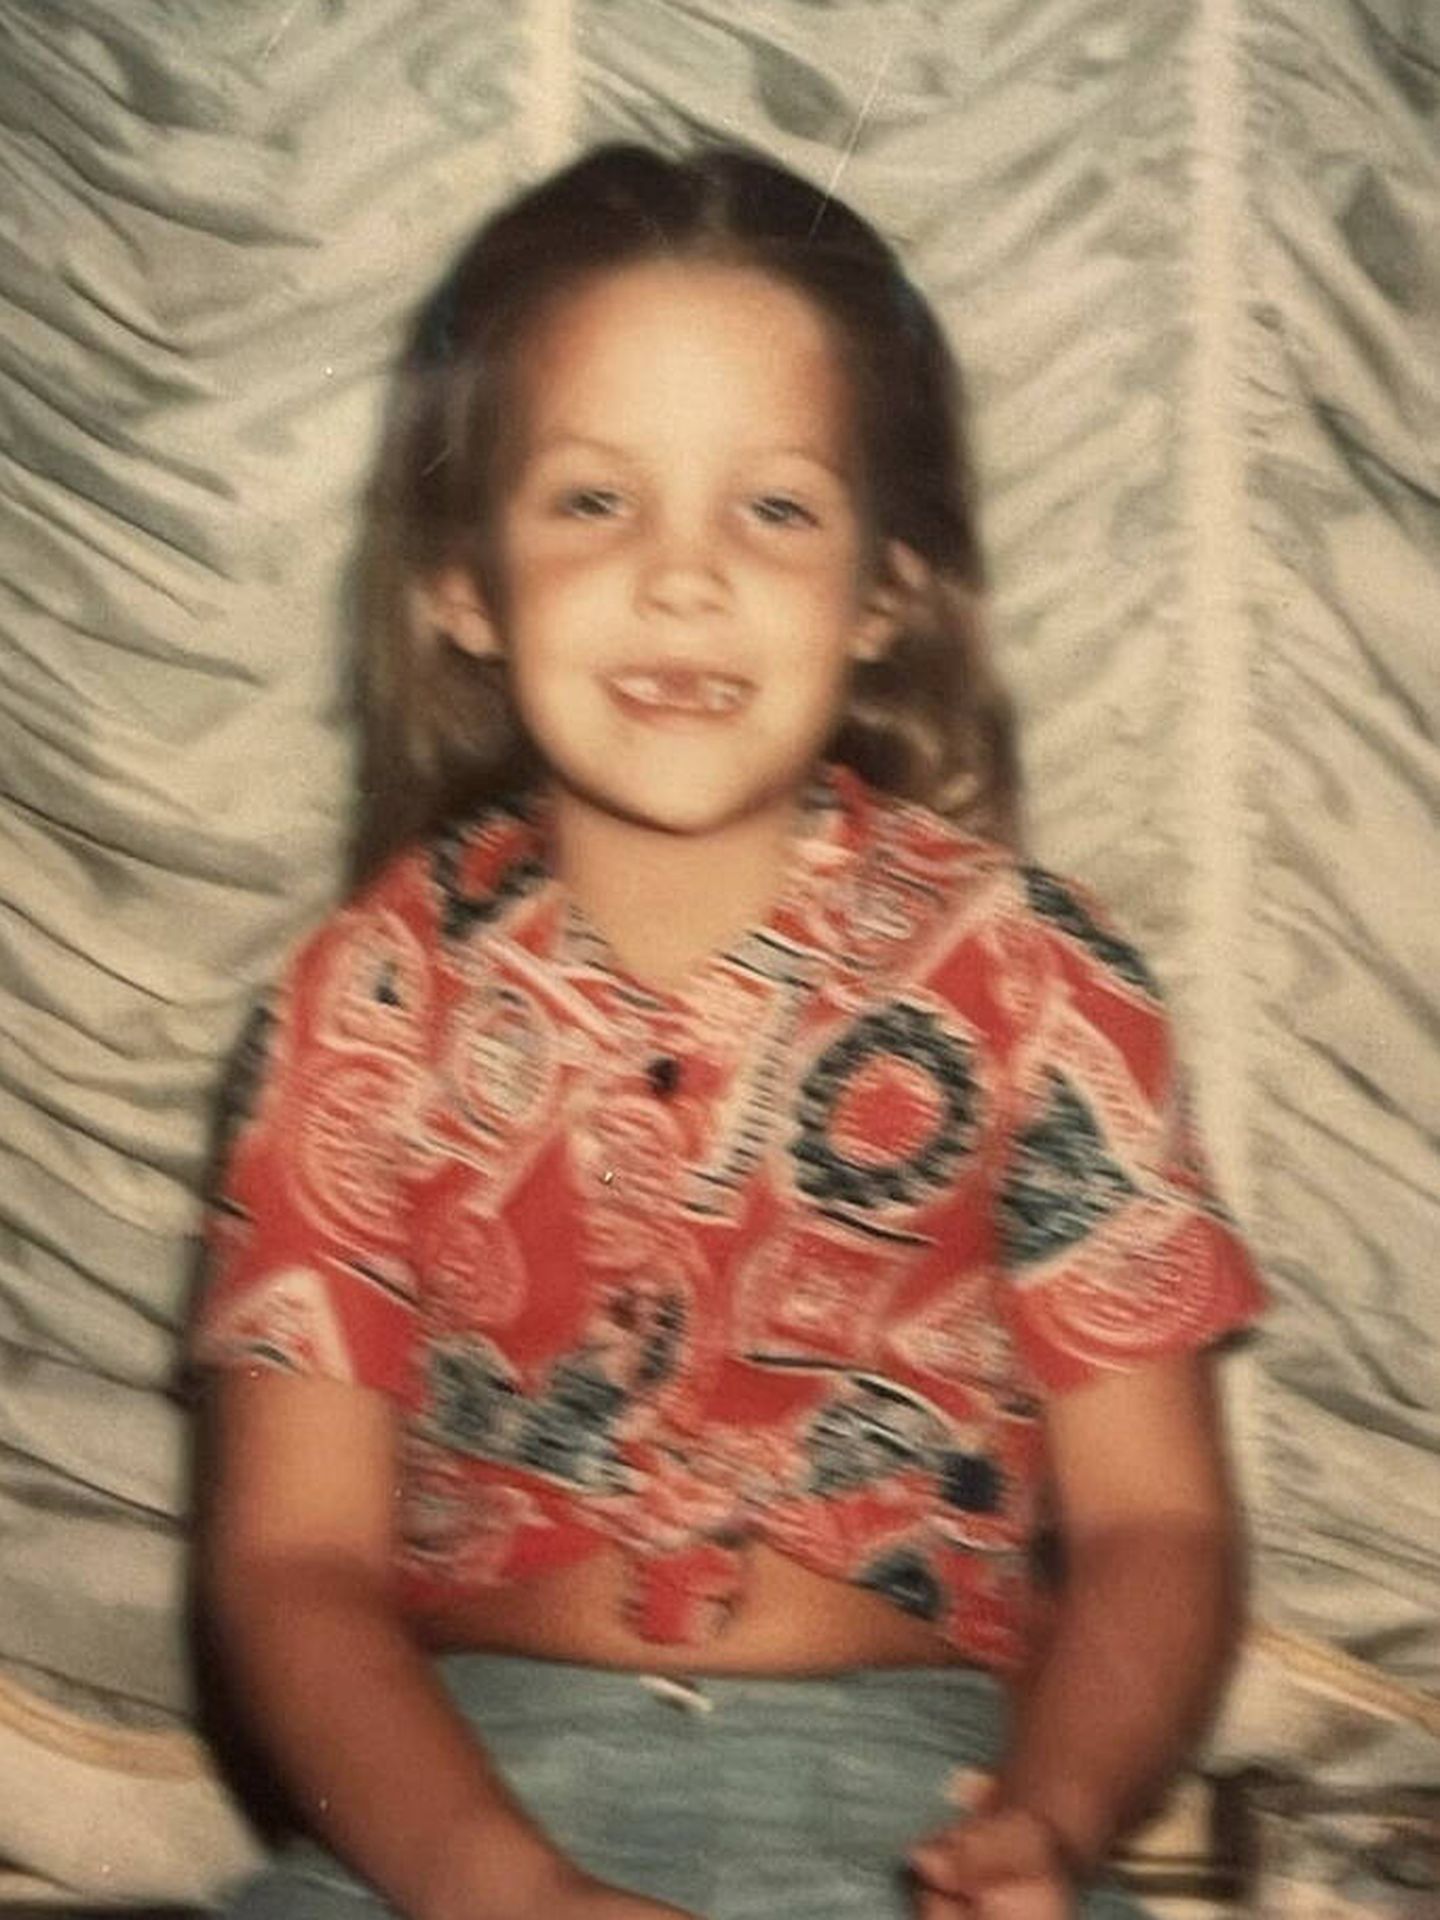 Lisa Marie Presley, a los 6 años. (Instagram/@lindathompson)